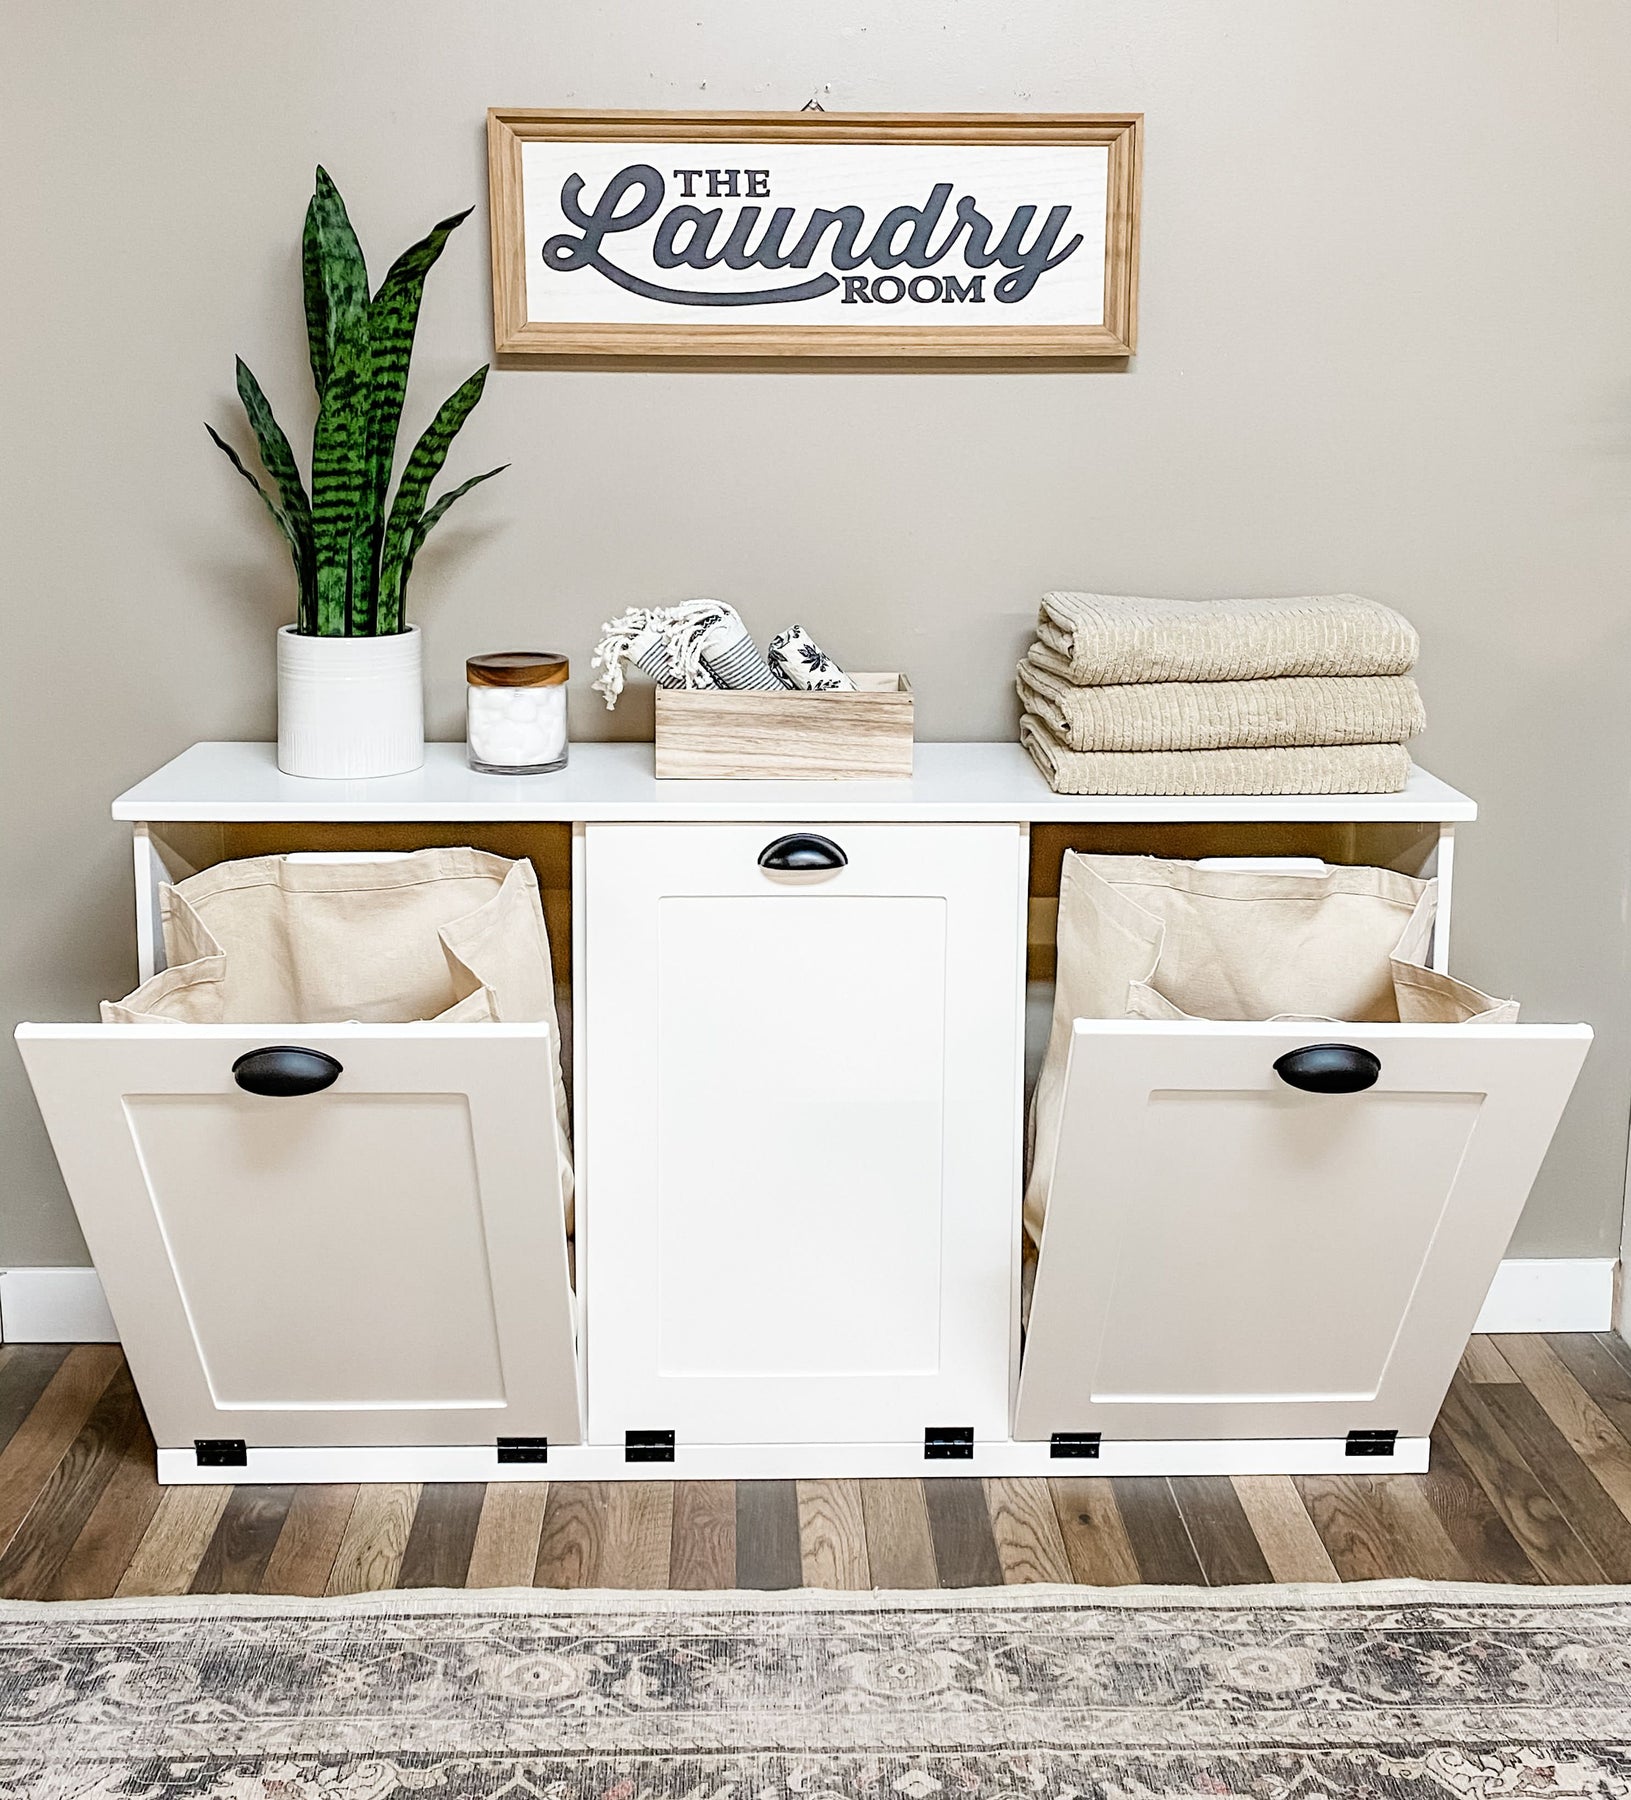 Wooden Laundry Bin Basket / Plain Pine / Unpainted Hamper Bathroom Box With  Lid